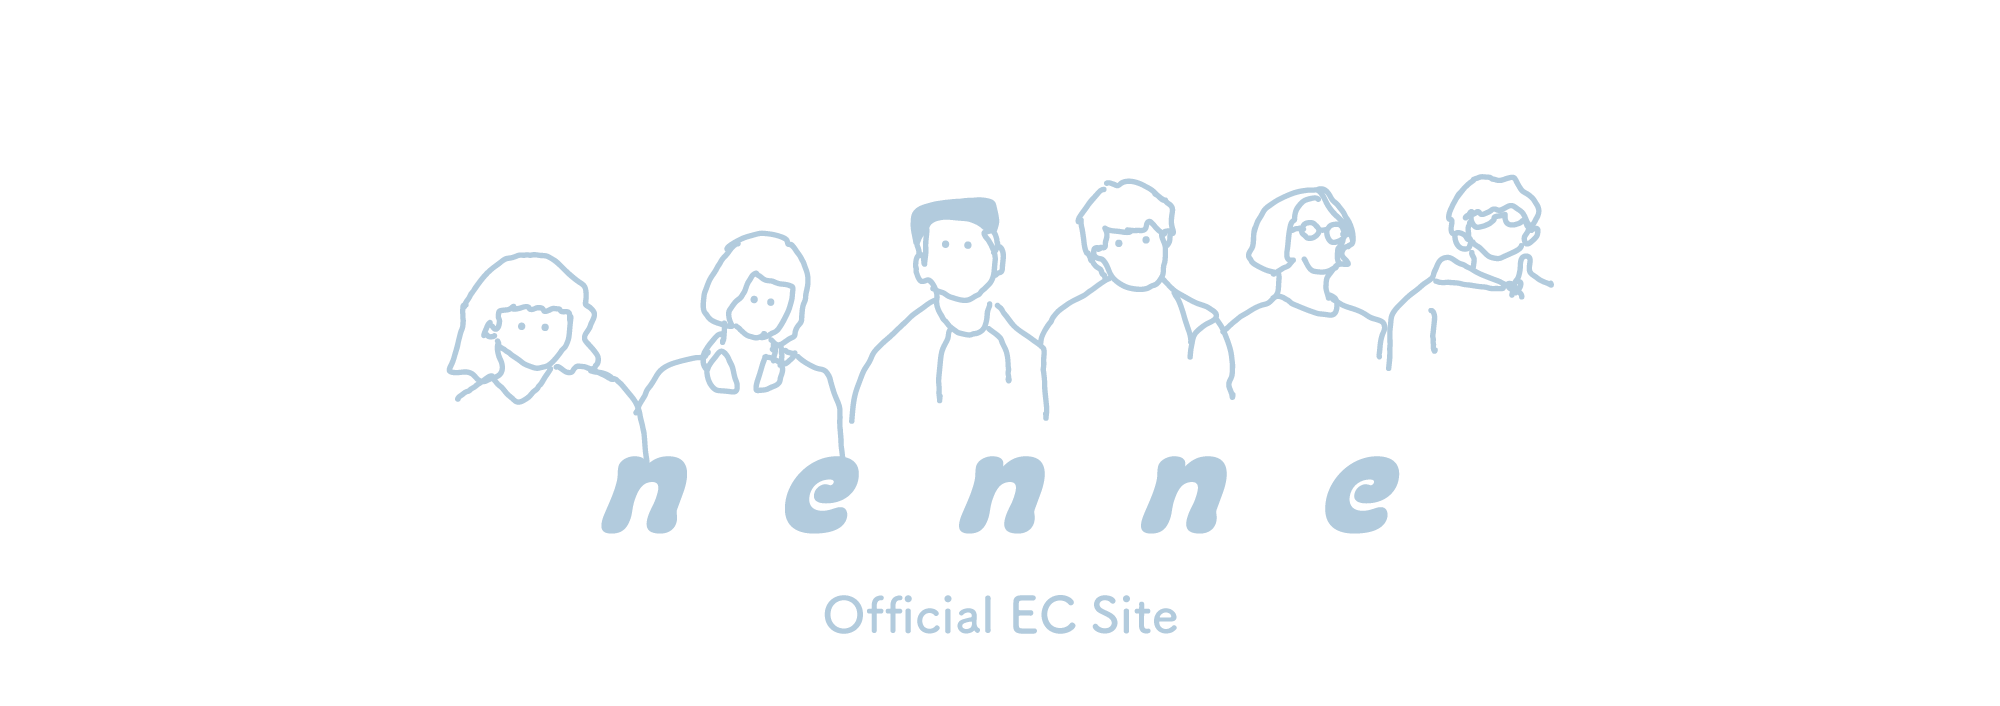 nenne official ec site